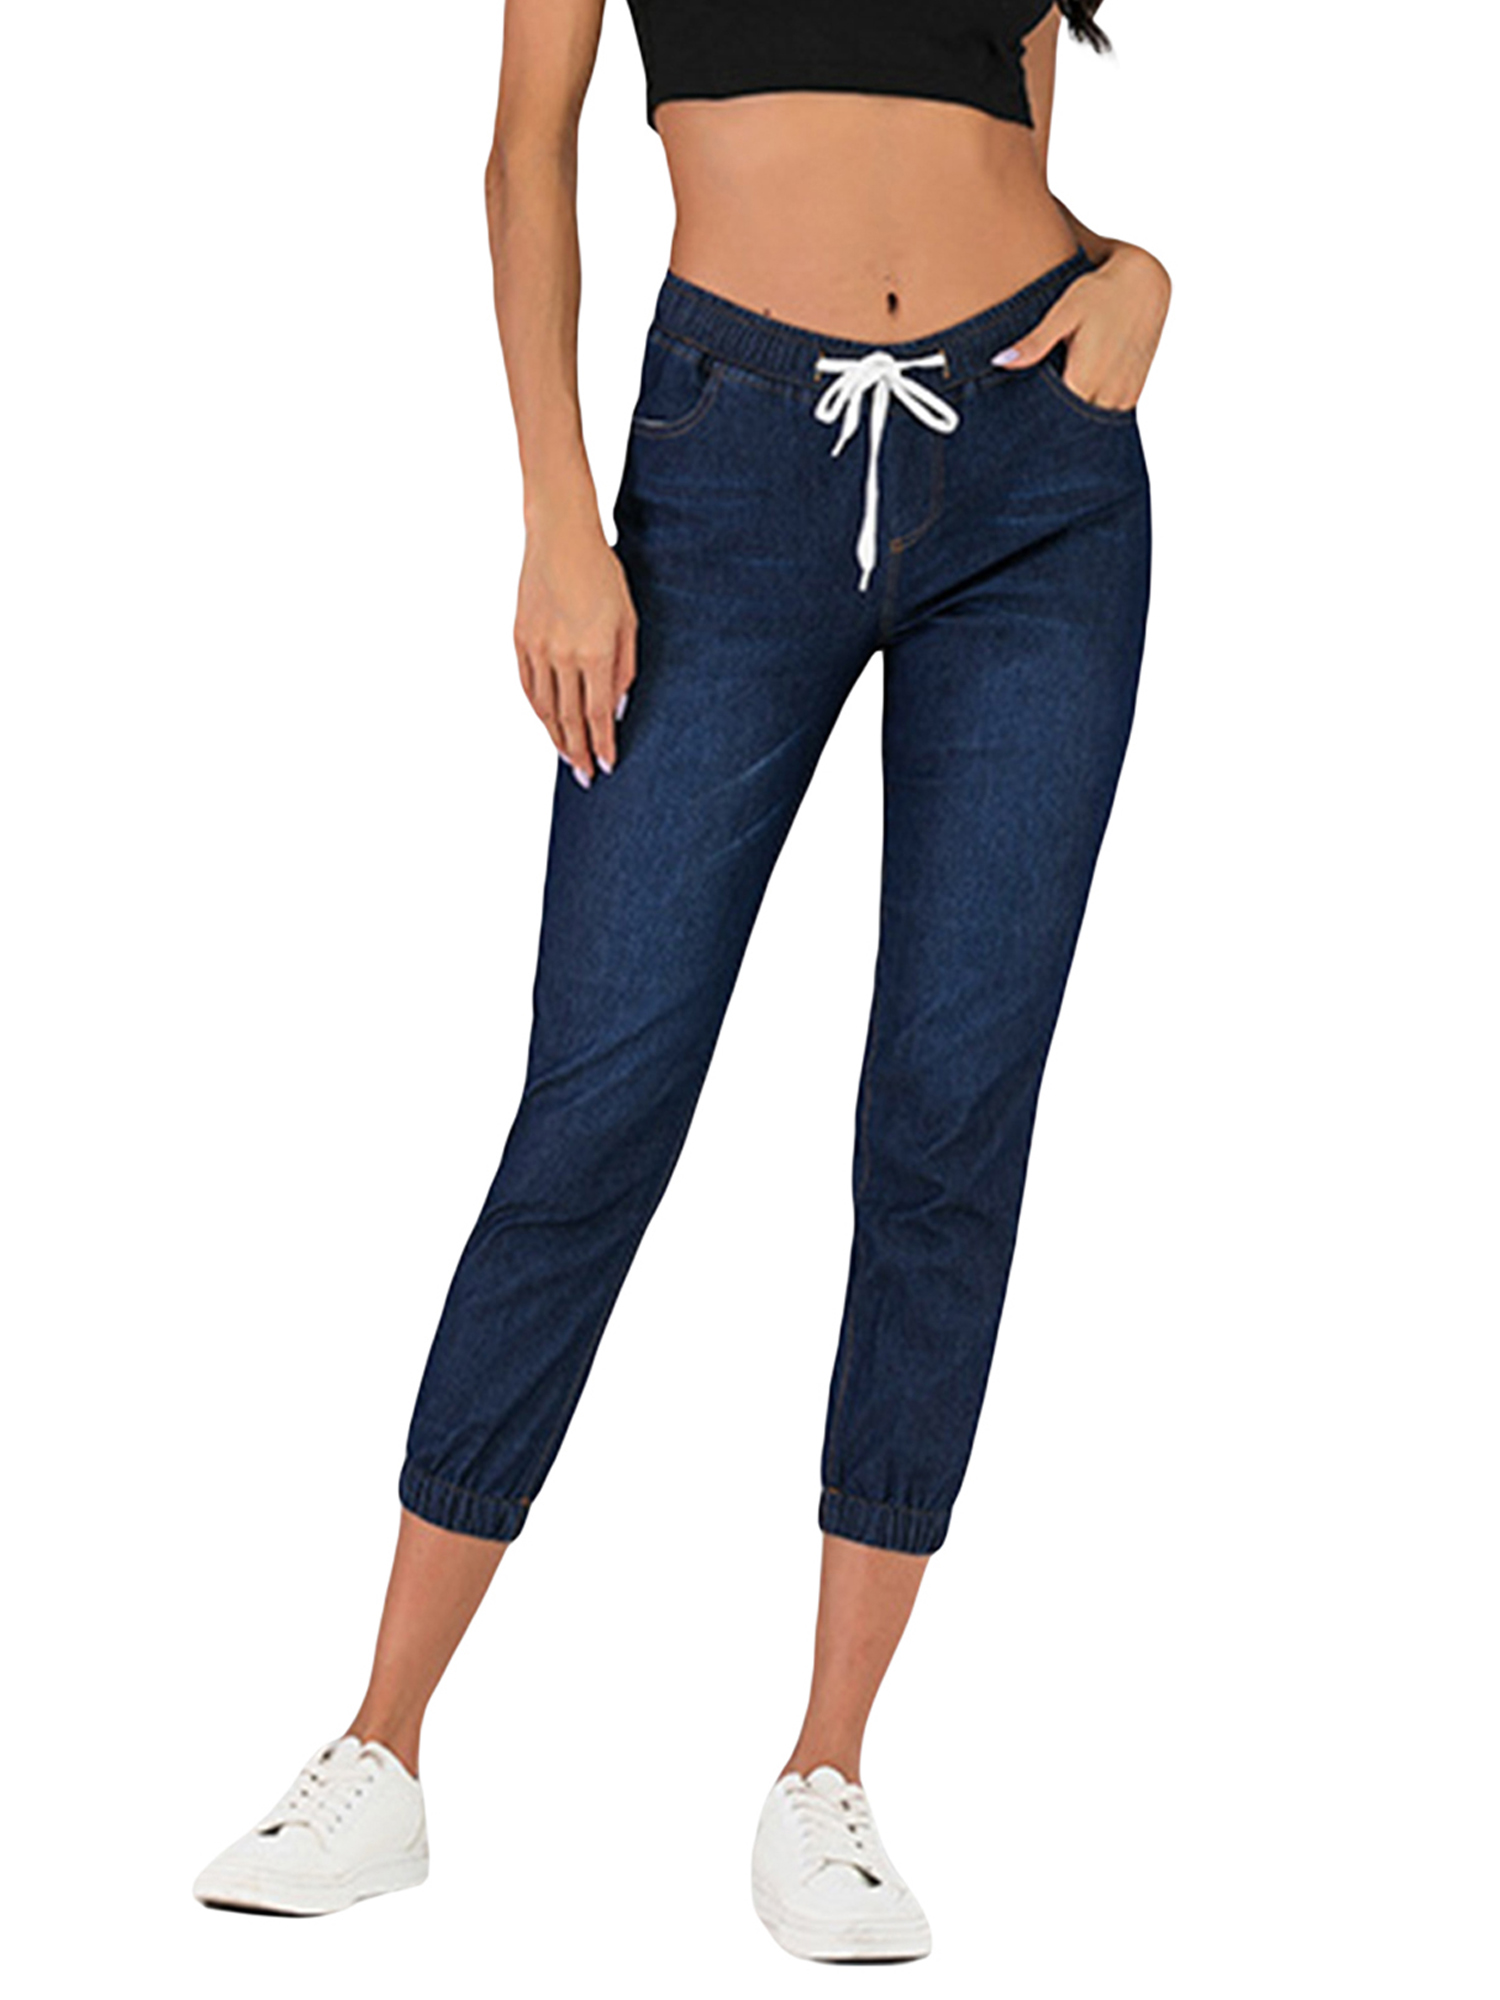 GuliriFei Women's Mid Rise Skinny Jeans Drawstring Elatic Waist Denim Pants - image 1 of 6